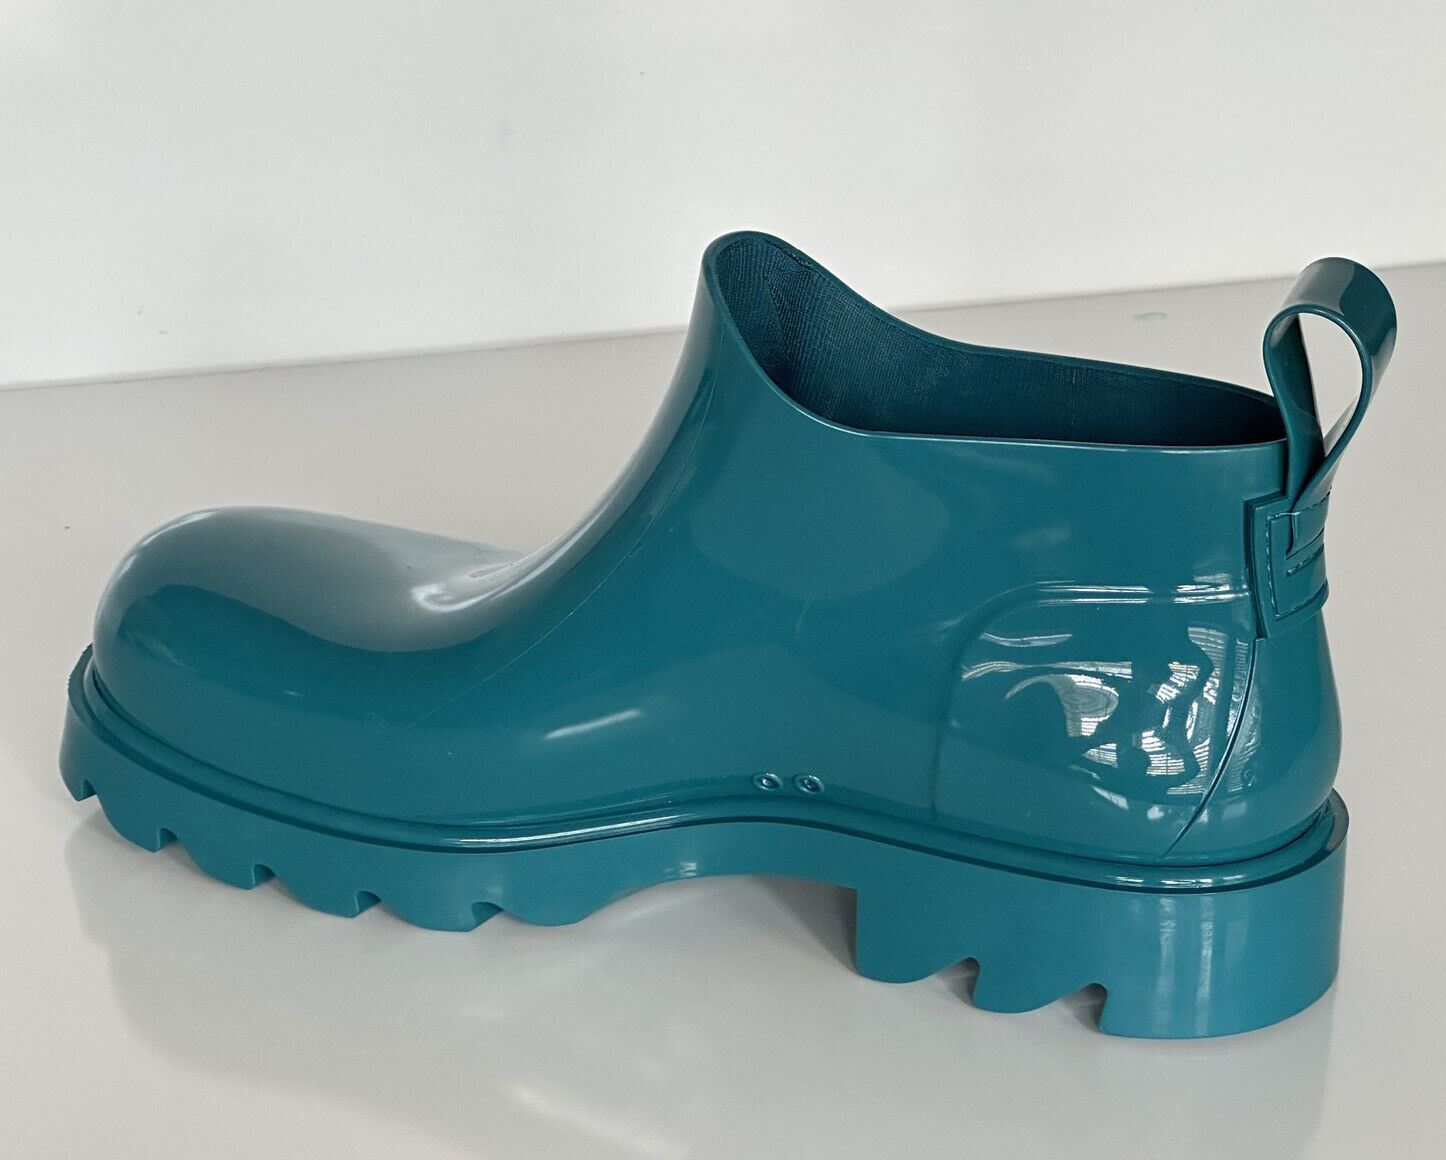 NIB Ботинки Bottega Veneta Shiny Rubber Blue за 650 долларов США 12 (45 евро) 680510 IT